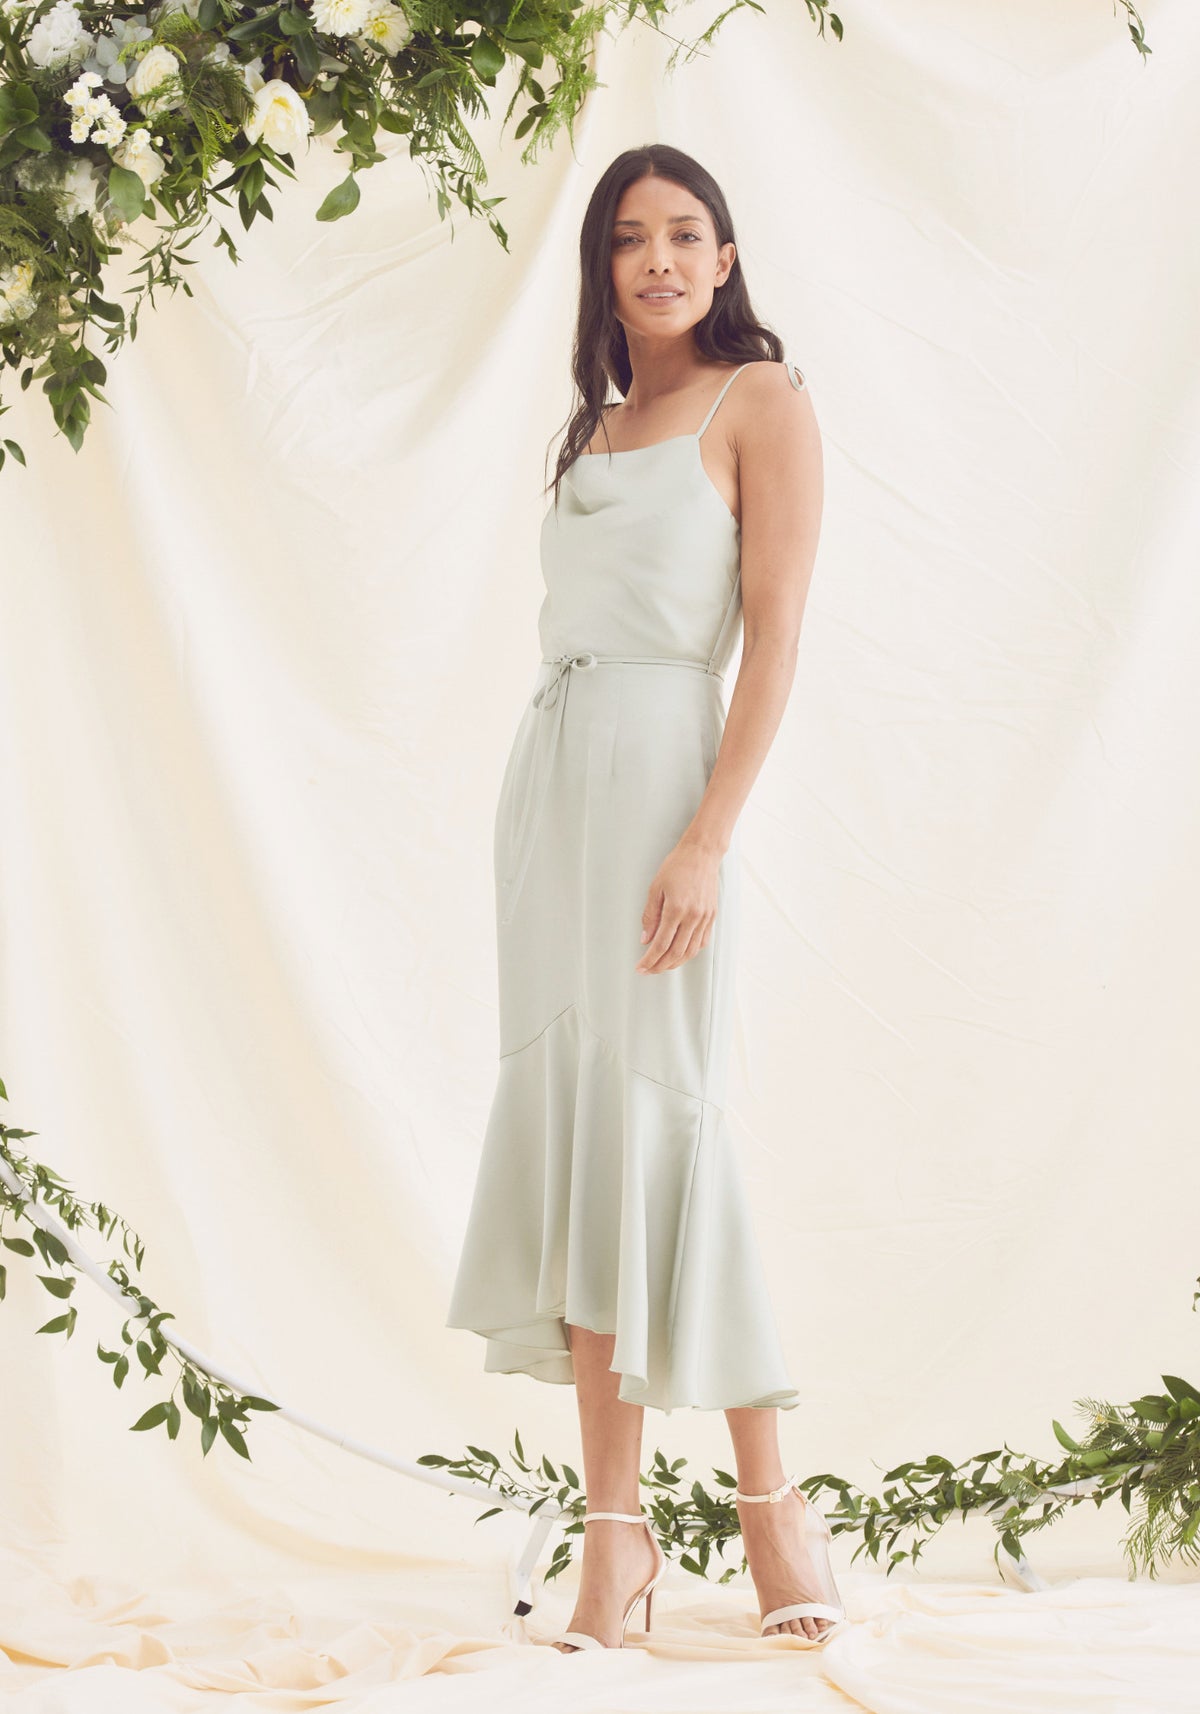 Sage Green Satin Bridesmaid Dress - Sage Green Satin Wedding Guest Dress UK